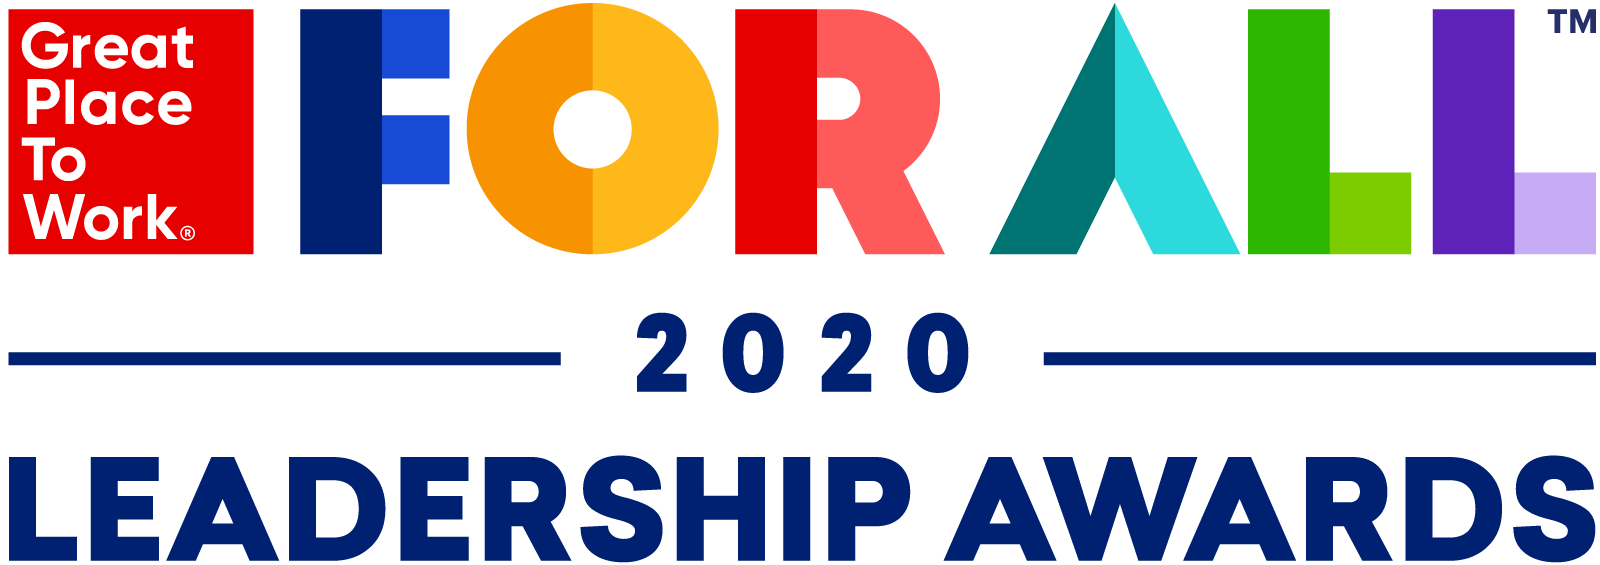 Summit_2020_Logos_leadership_award_1600